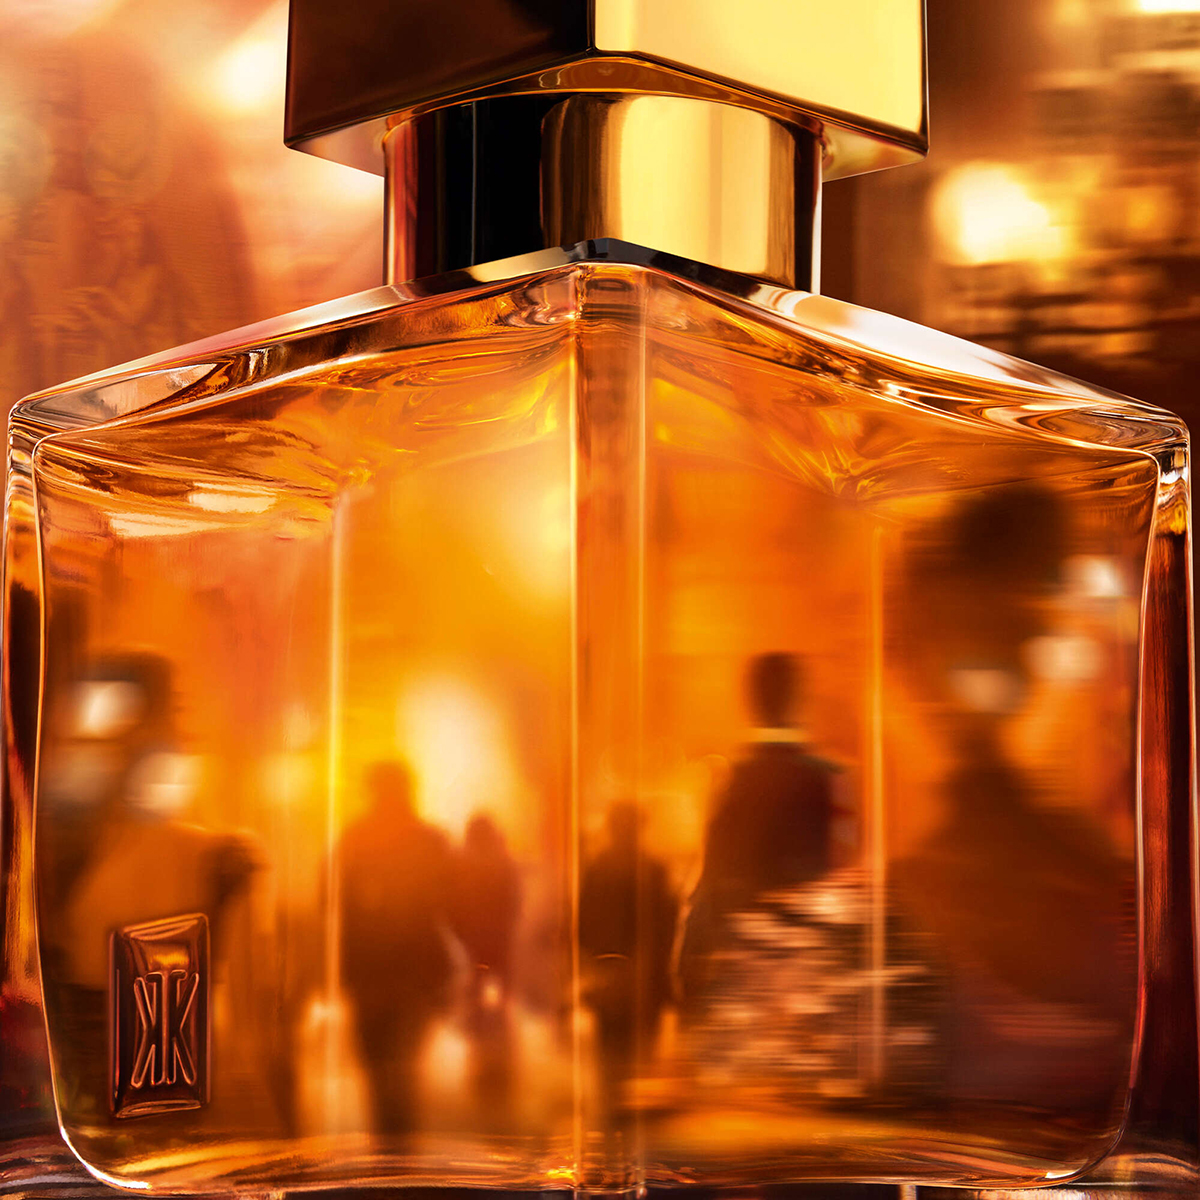 Maison Francis Kurkdjian - Grand Soir Eau de Parfum